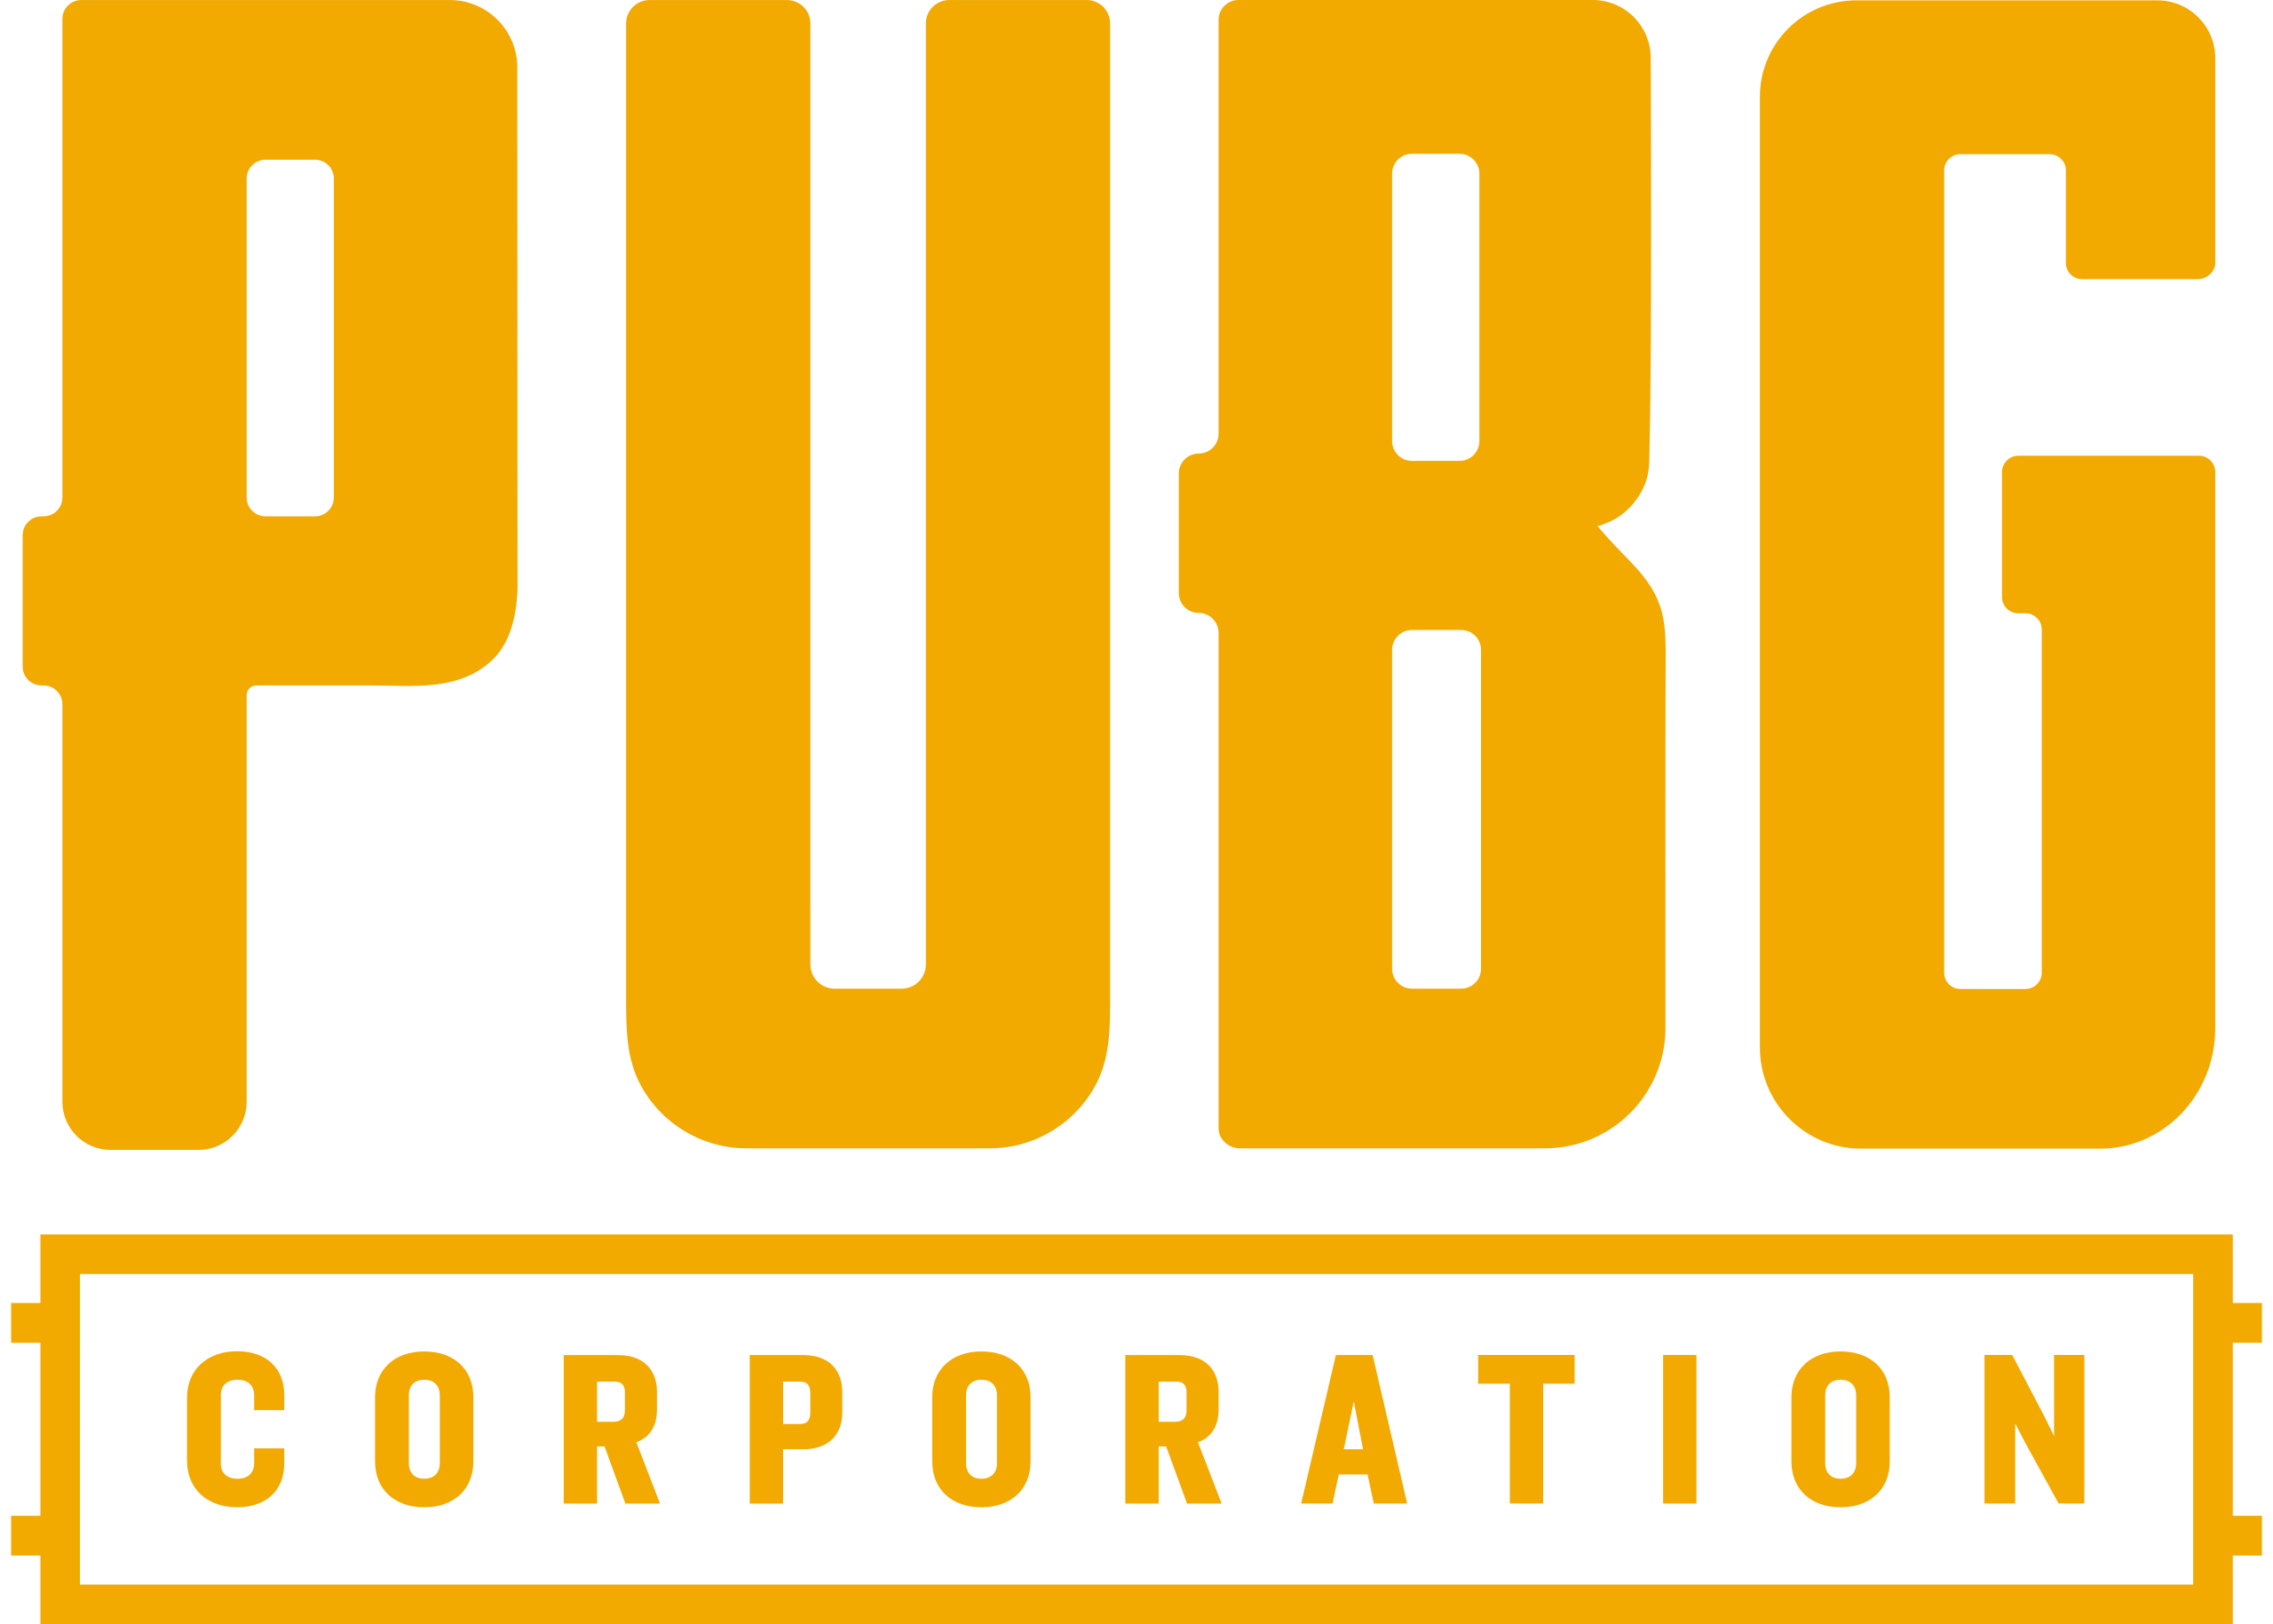 pubg logo